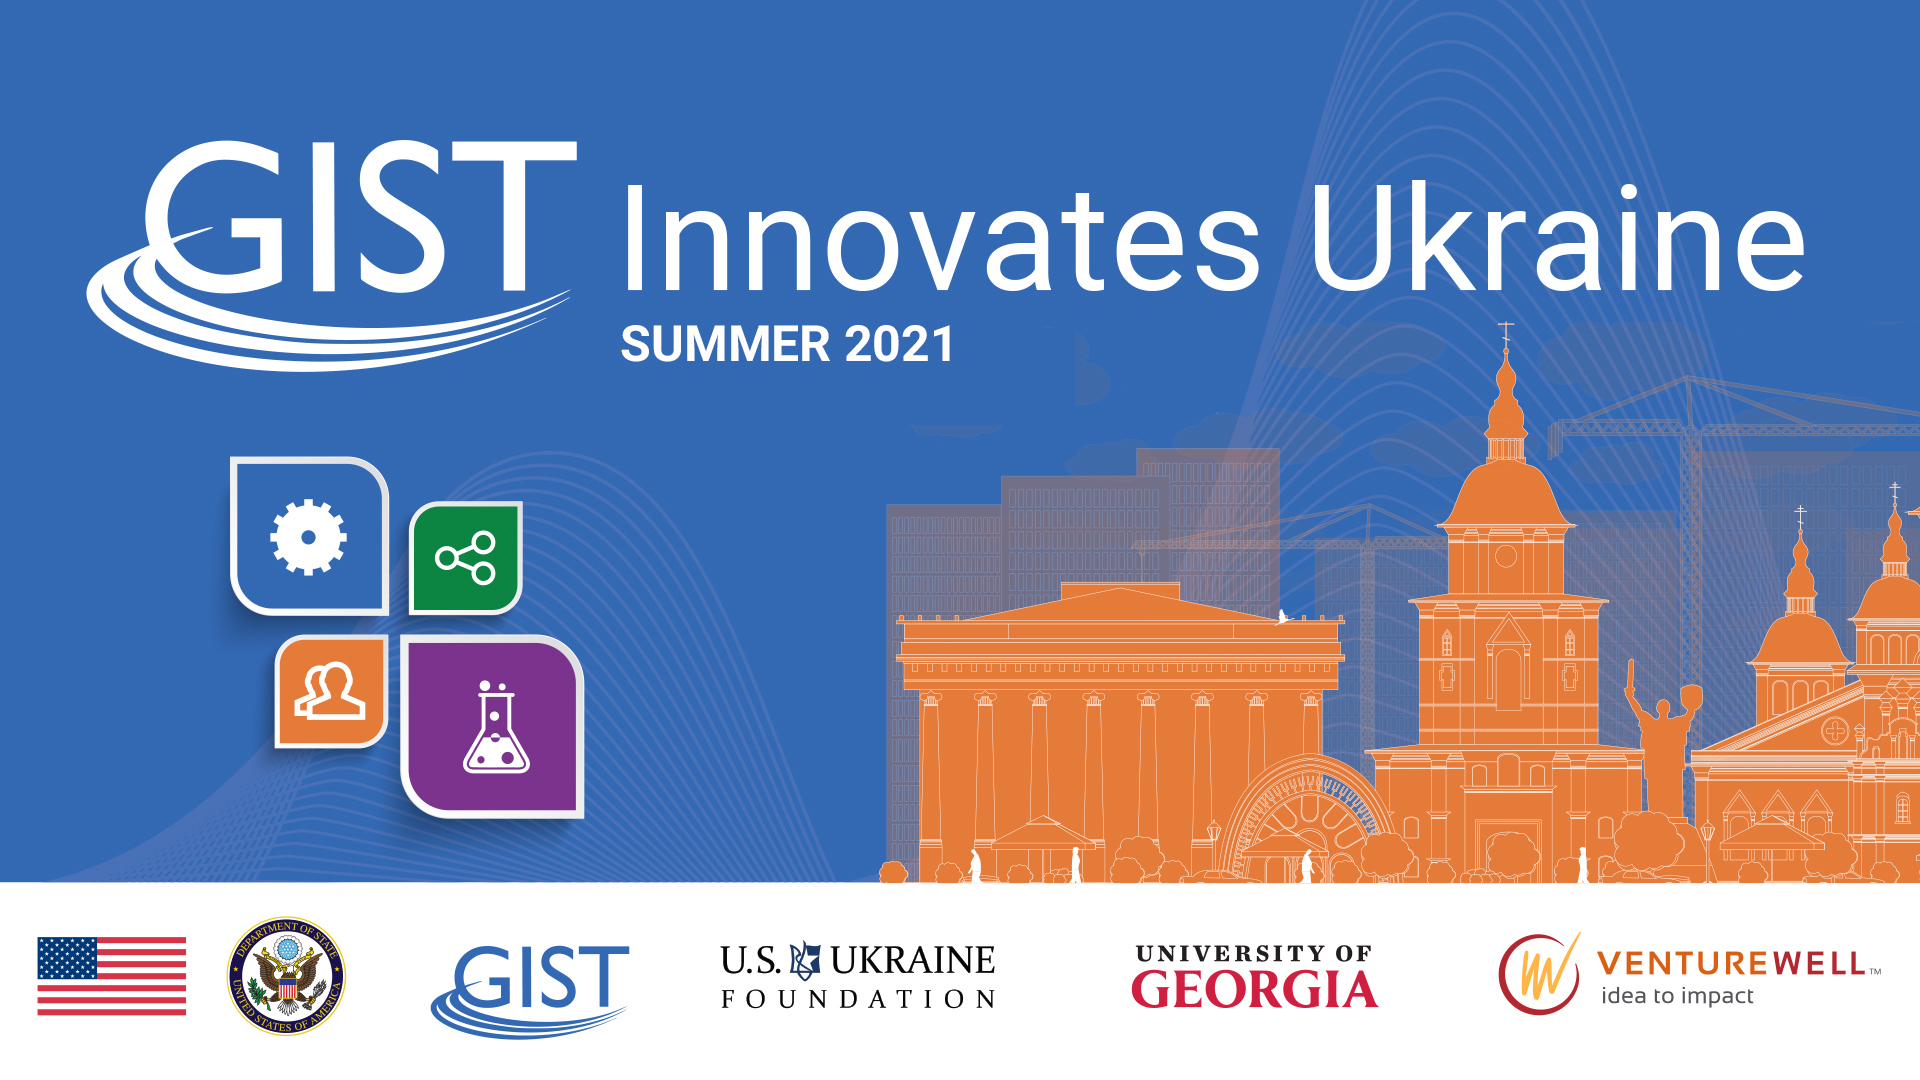 GIST Innovates Ukraine